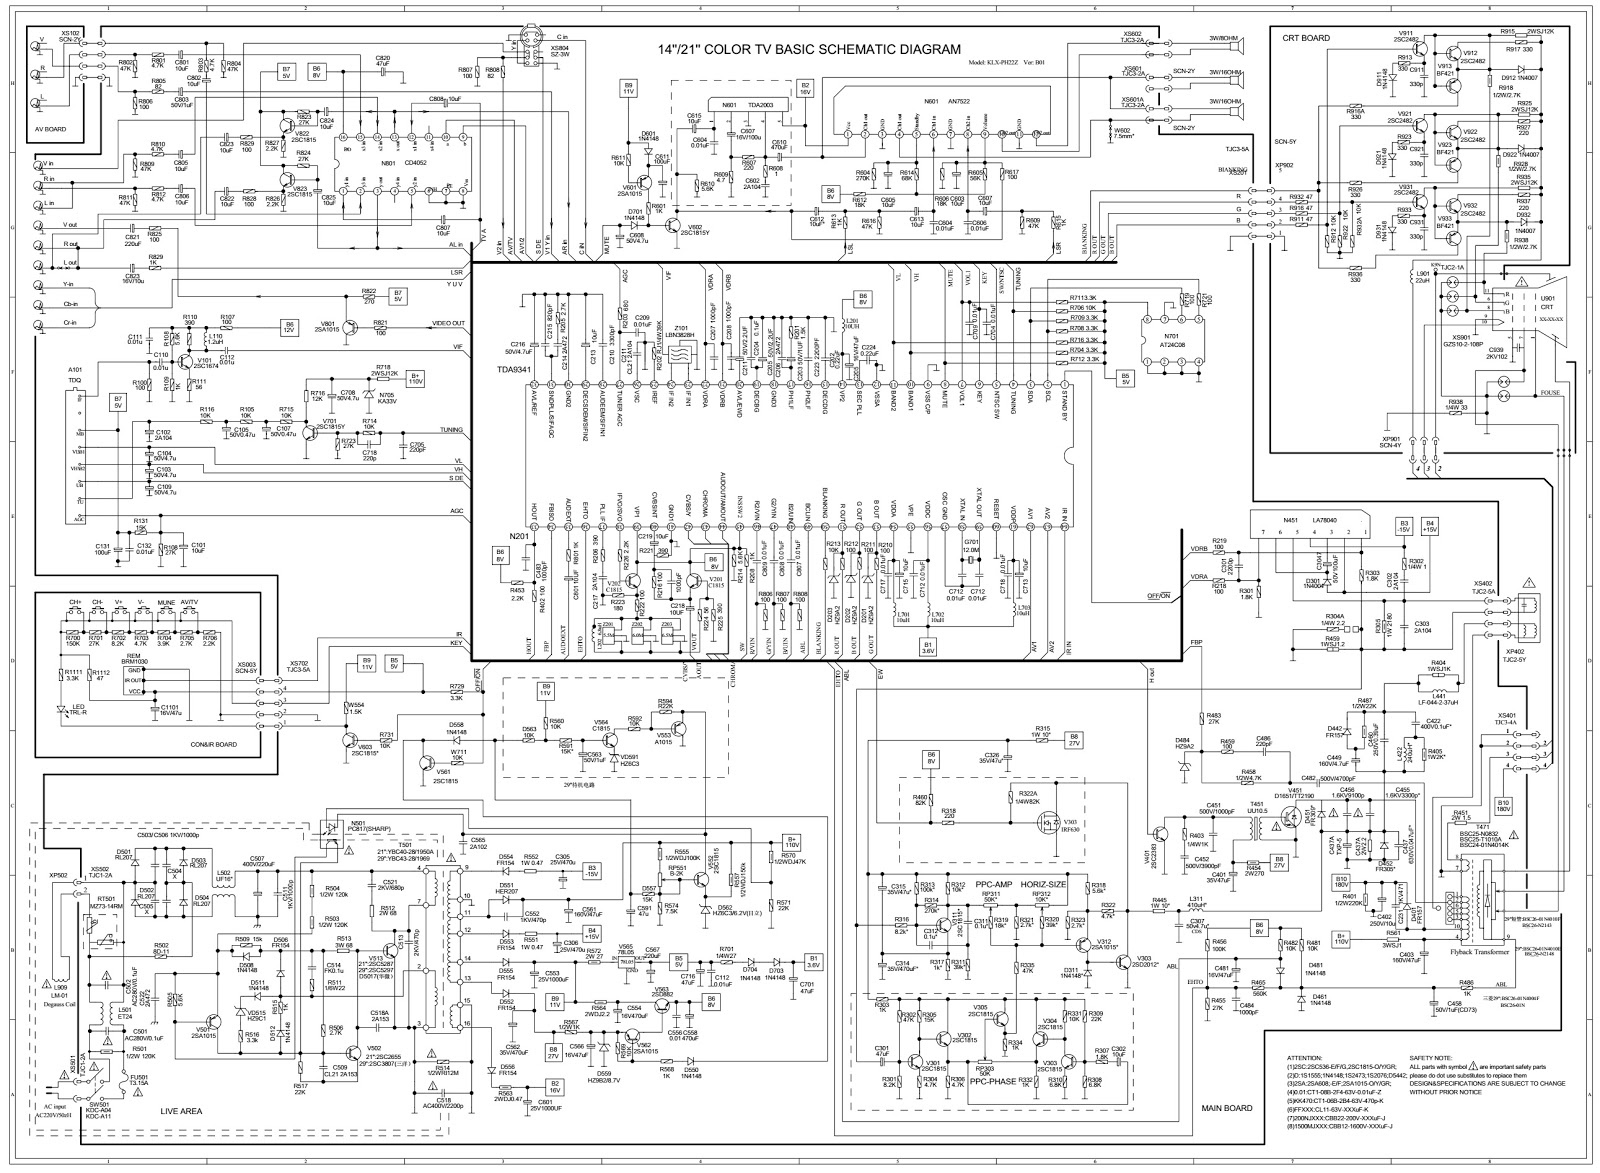 Schematic Diagrams: Color TV circuit diagram using TDA9341 IC 14 and 21